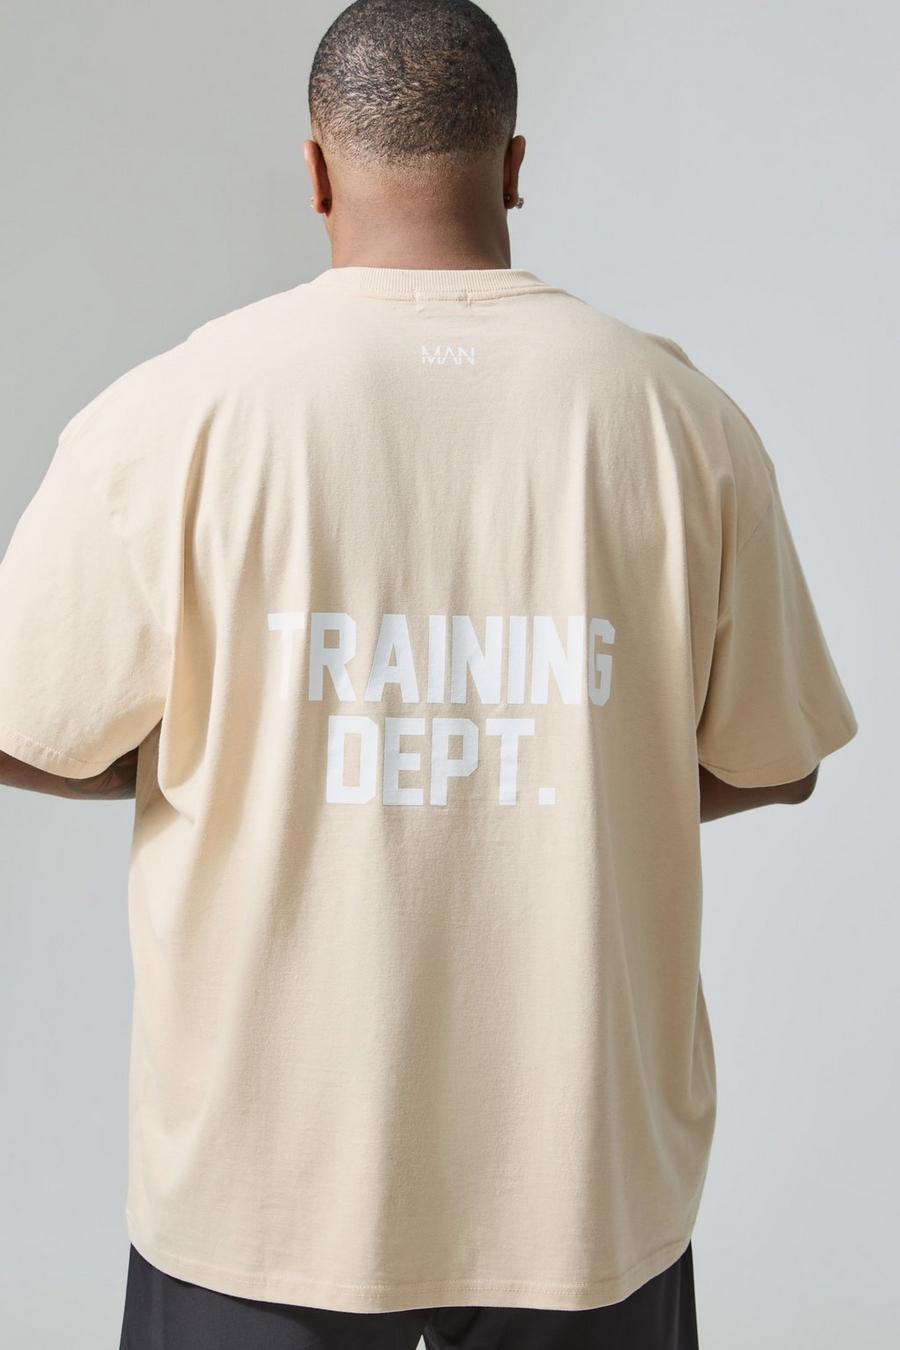 T-shirt Plus Size oversize Training Dept, Sand